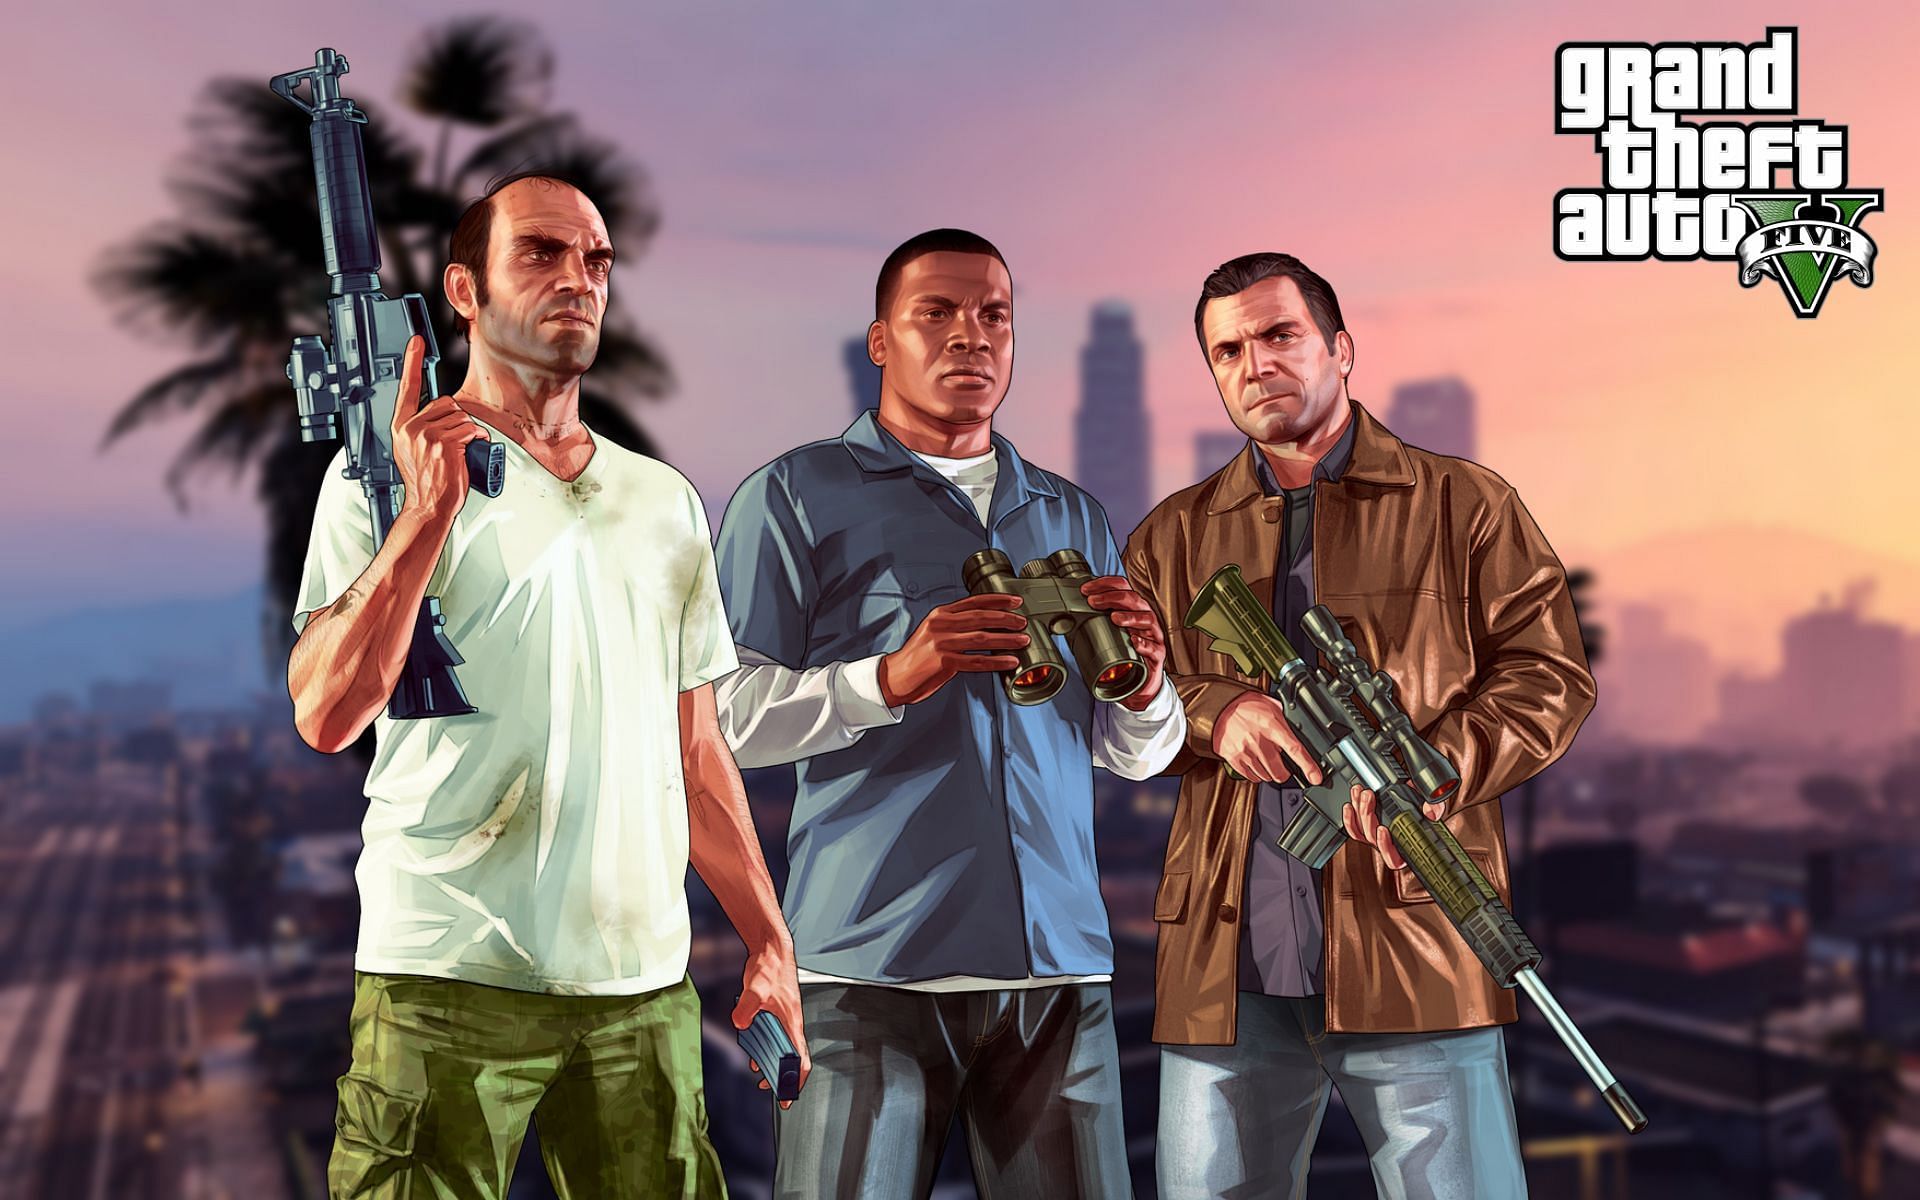 Grand Theft Auto Gta V 5 Painting, Grand Theft Auto 5 Map